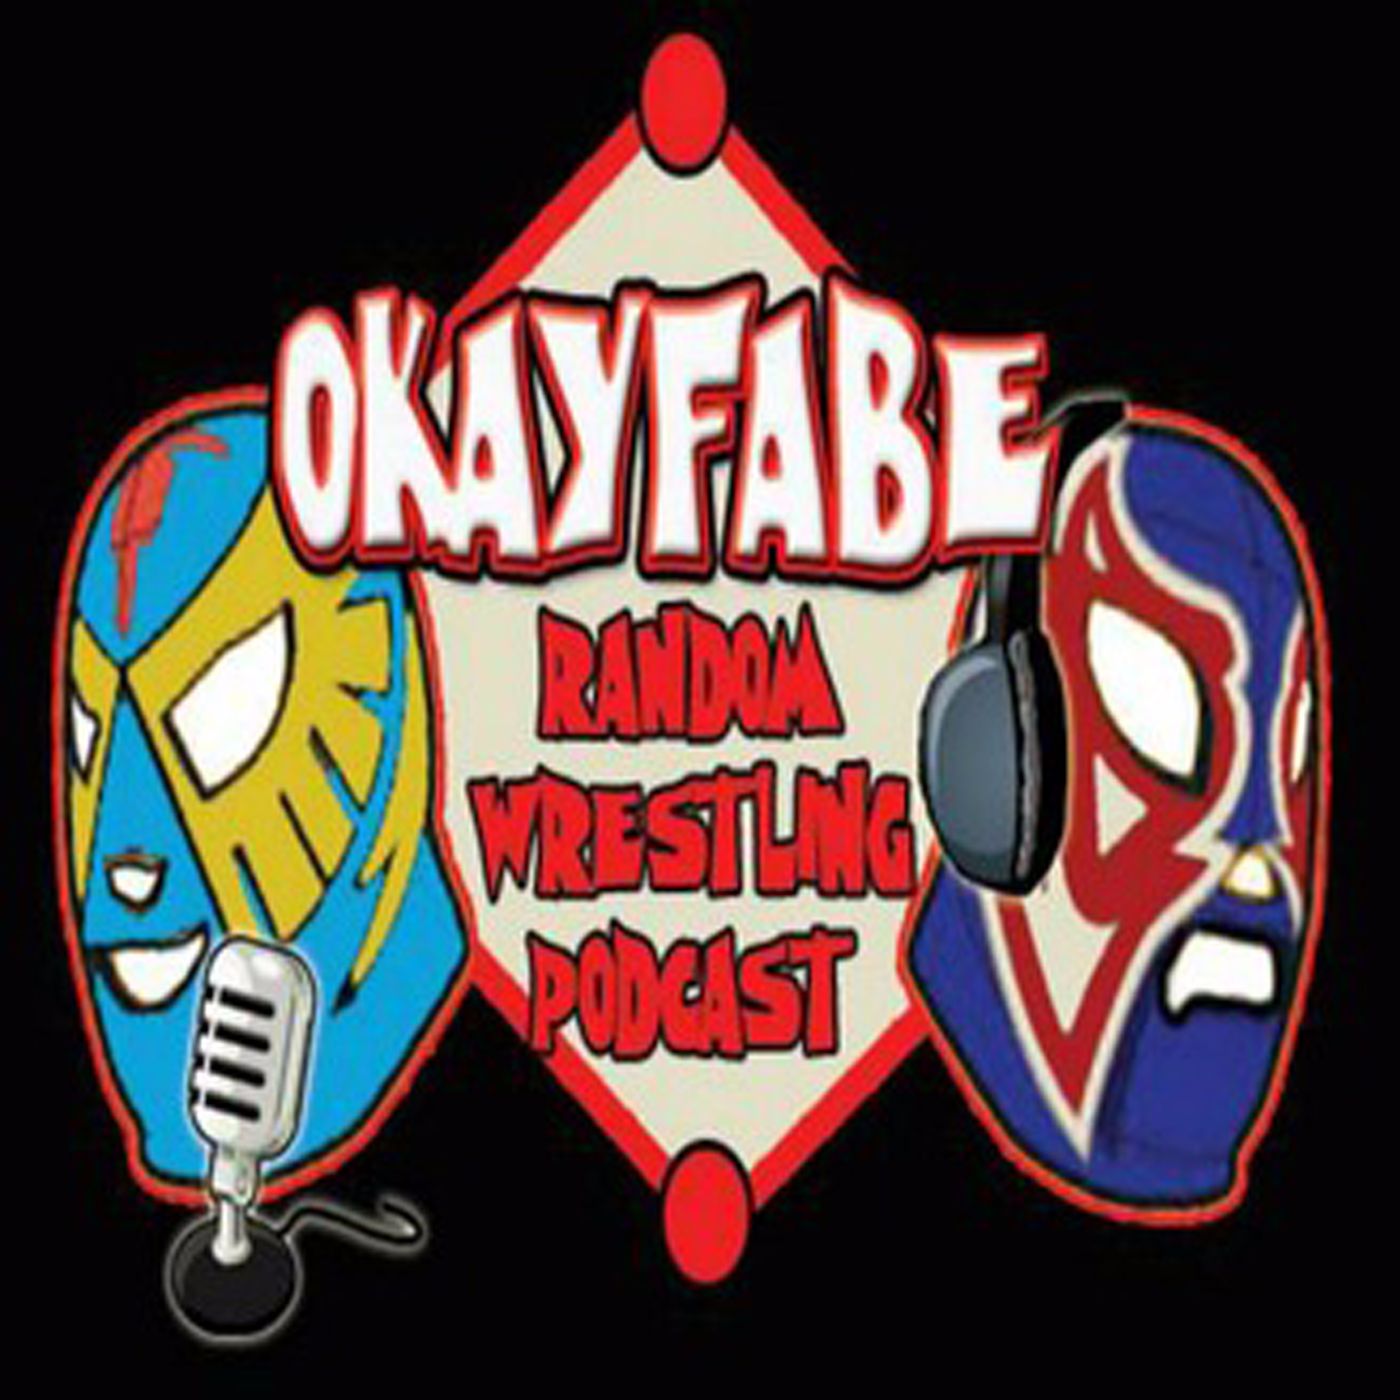 OKayFabe Random Wrestling Podcast